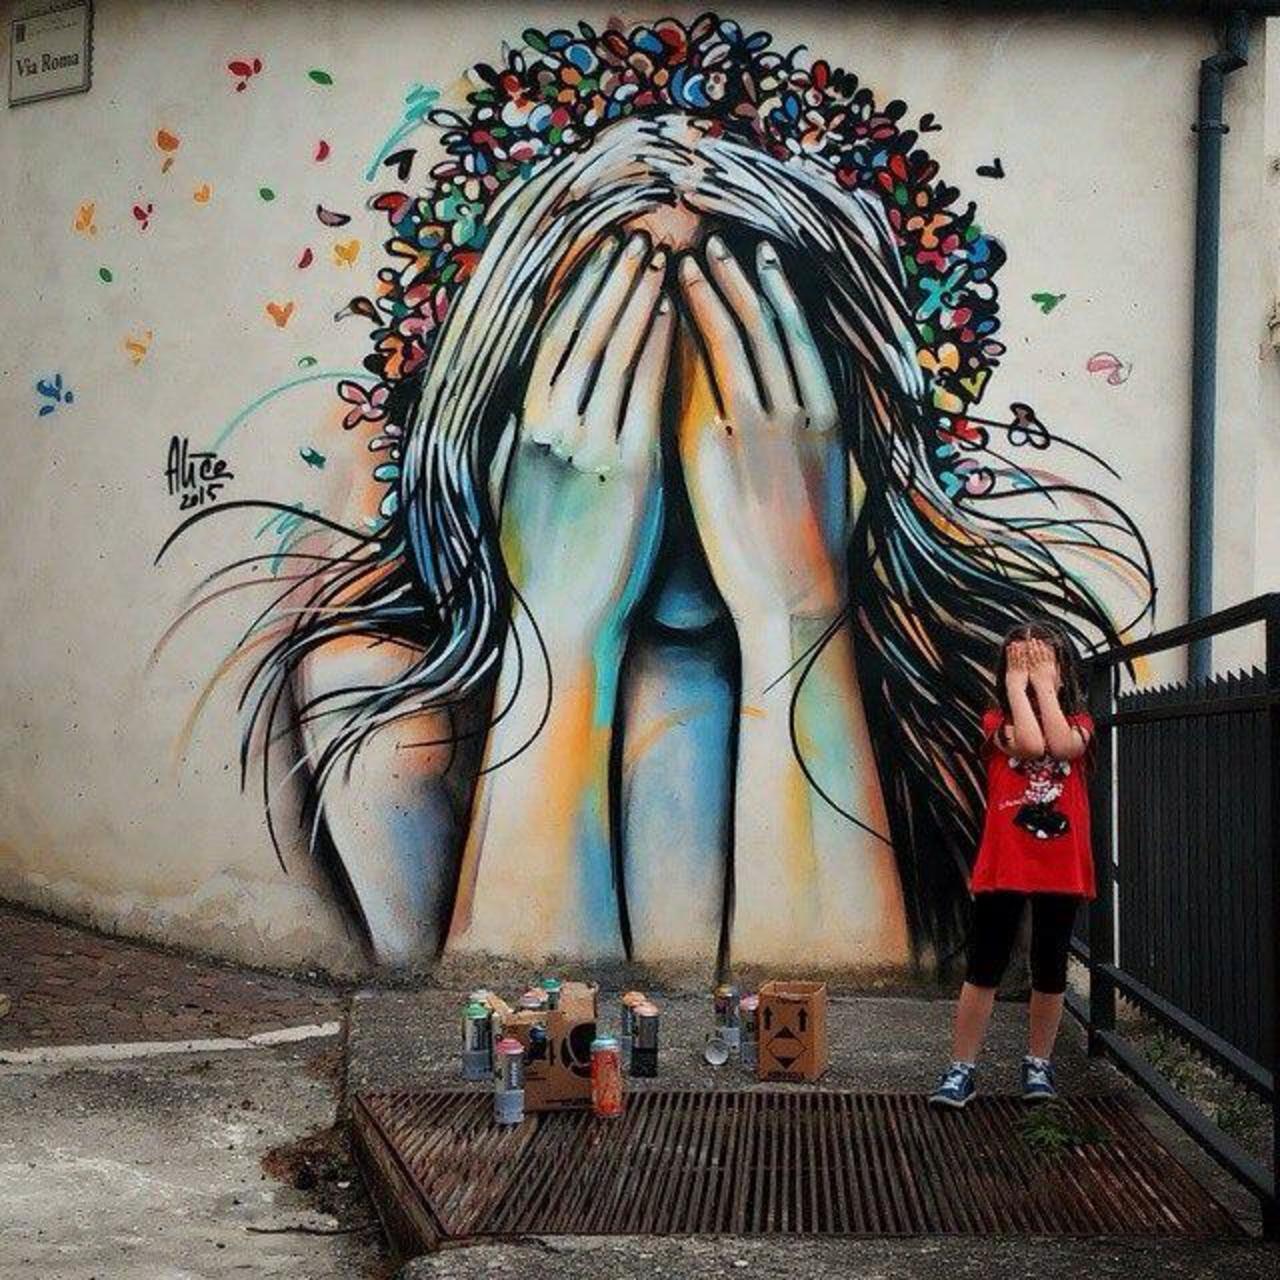 RT@GoogleStreetArt: New Street Art by Alice Pasquini  

#art #arte #graffiti #streetart http://t.co/DuQN3MTQiS"